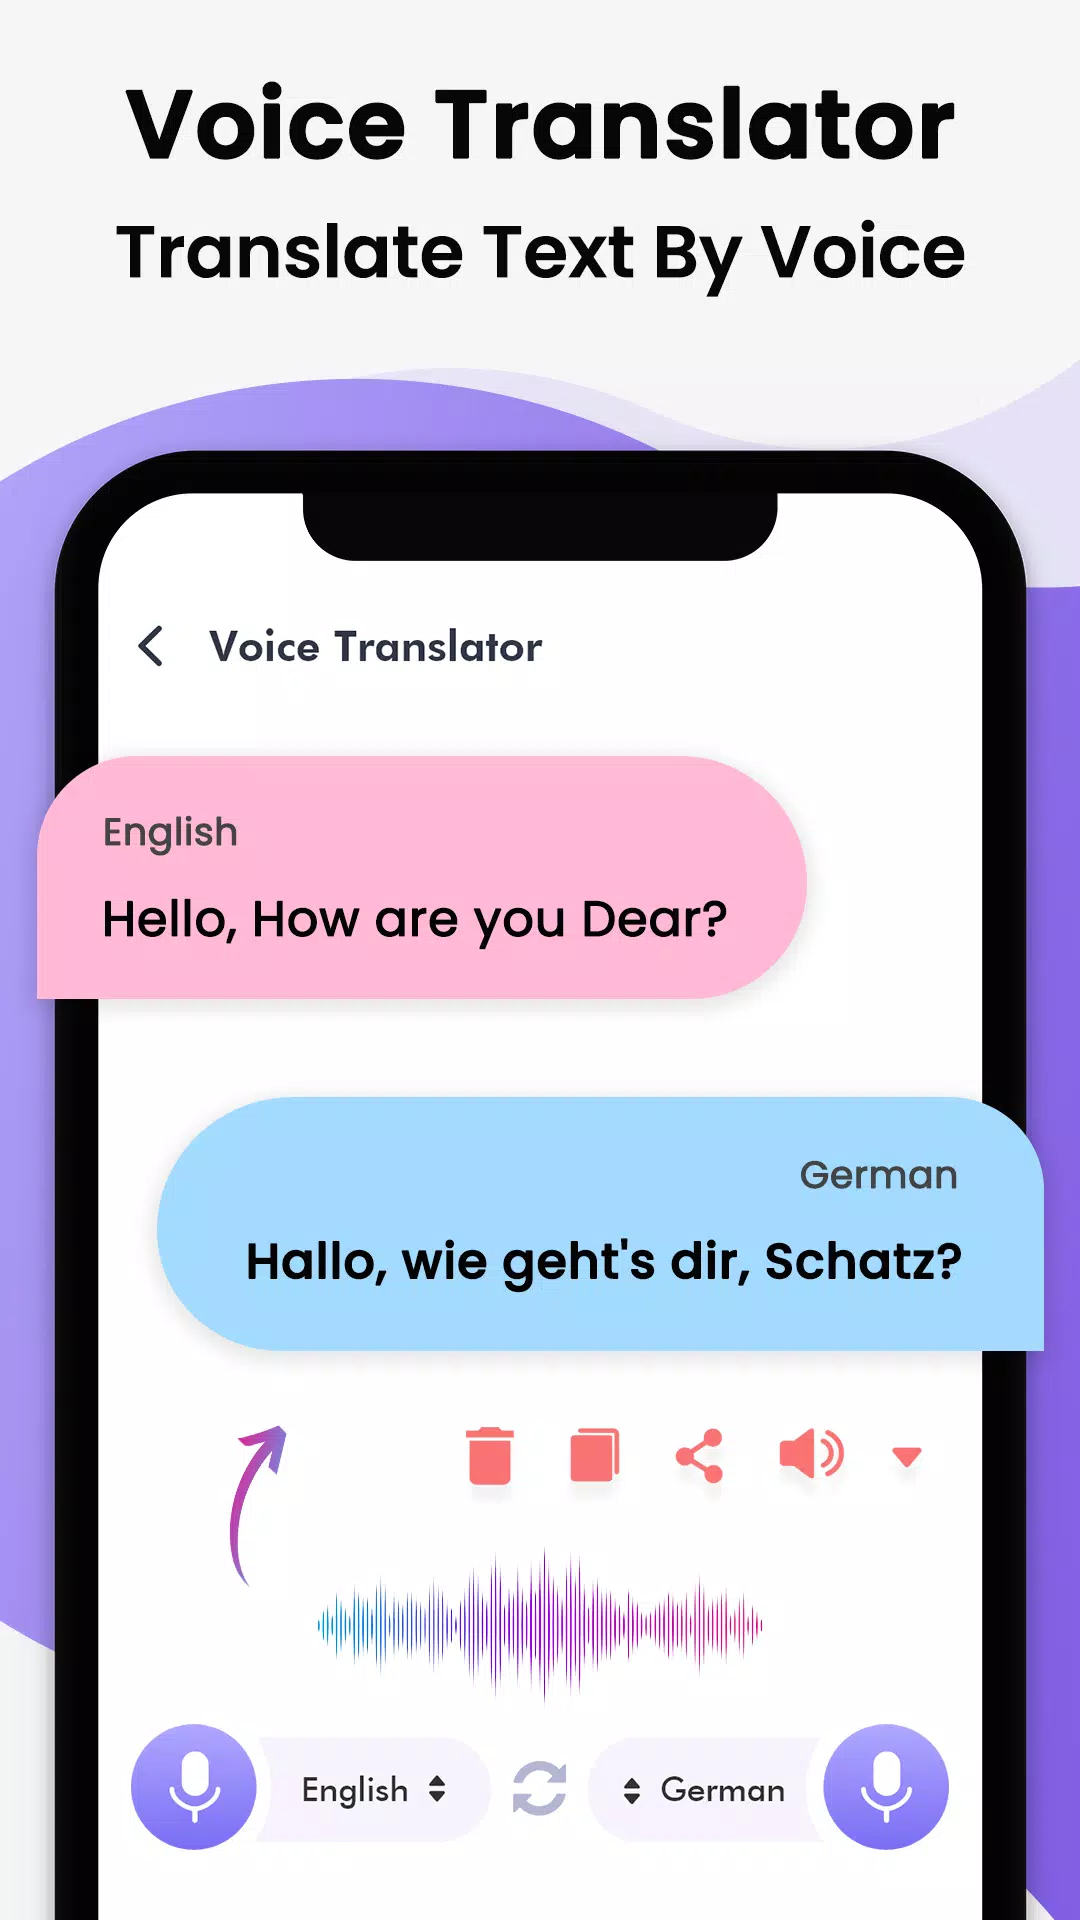 Tradutor de bate-papo Whatsapp – Apps no Google Play